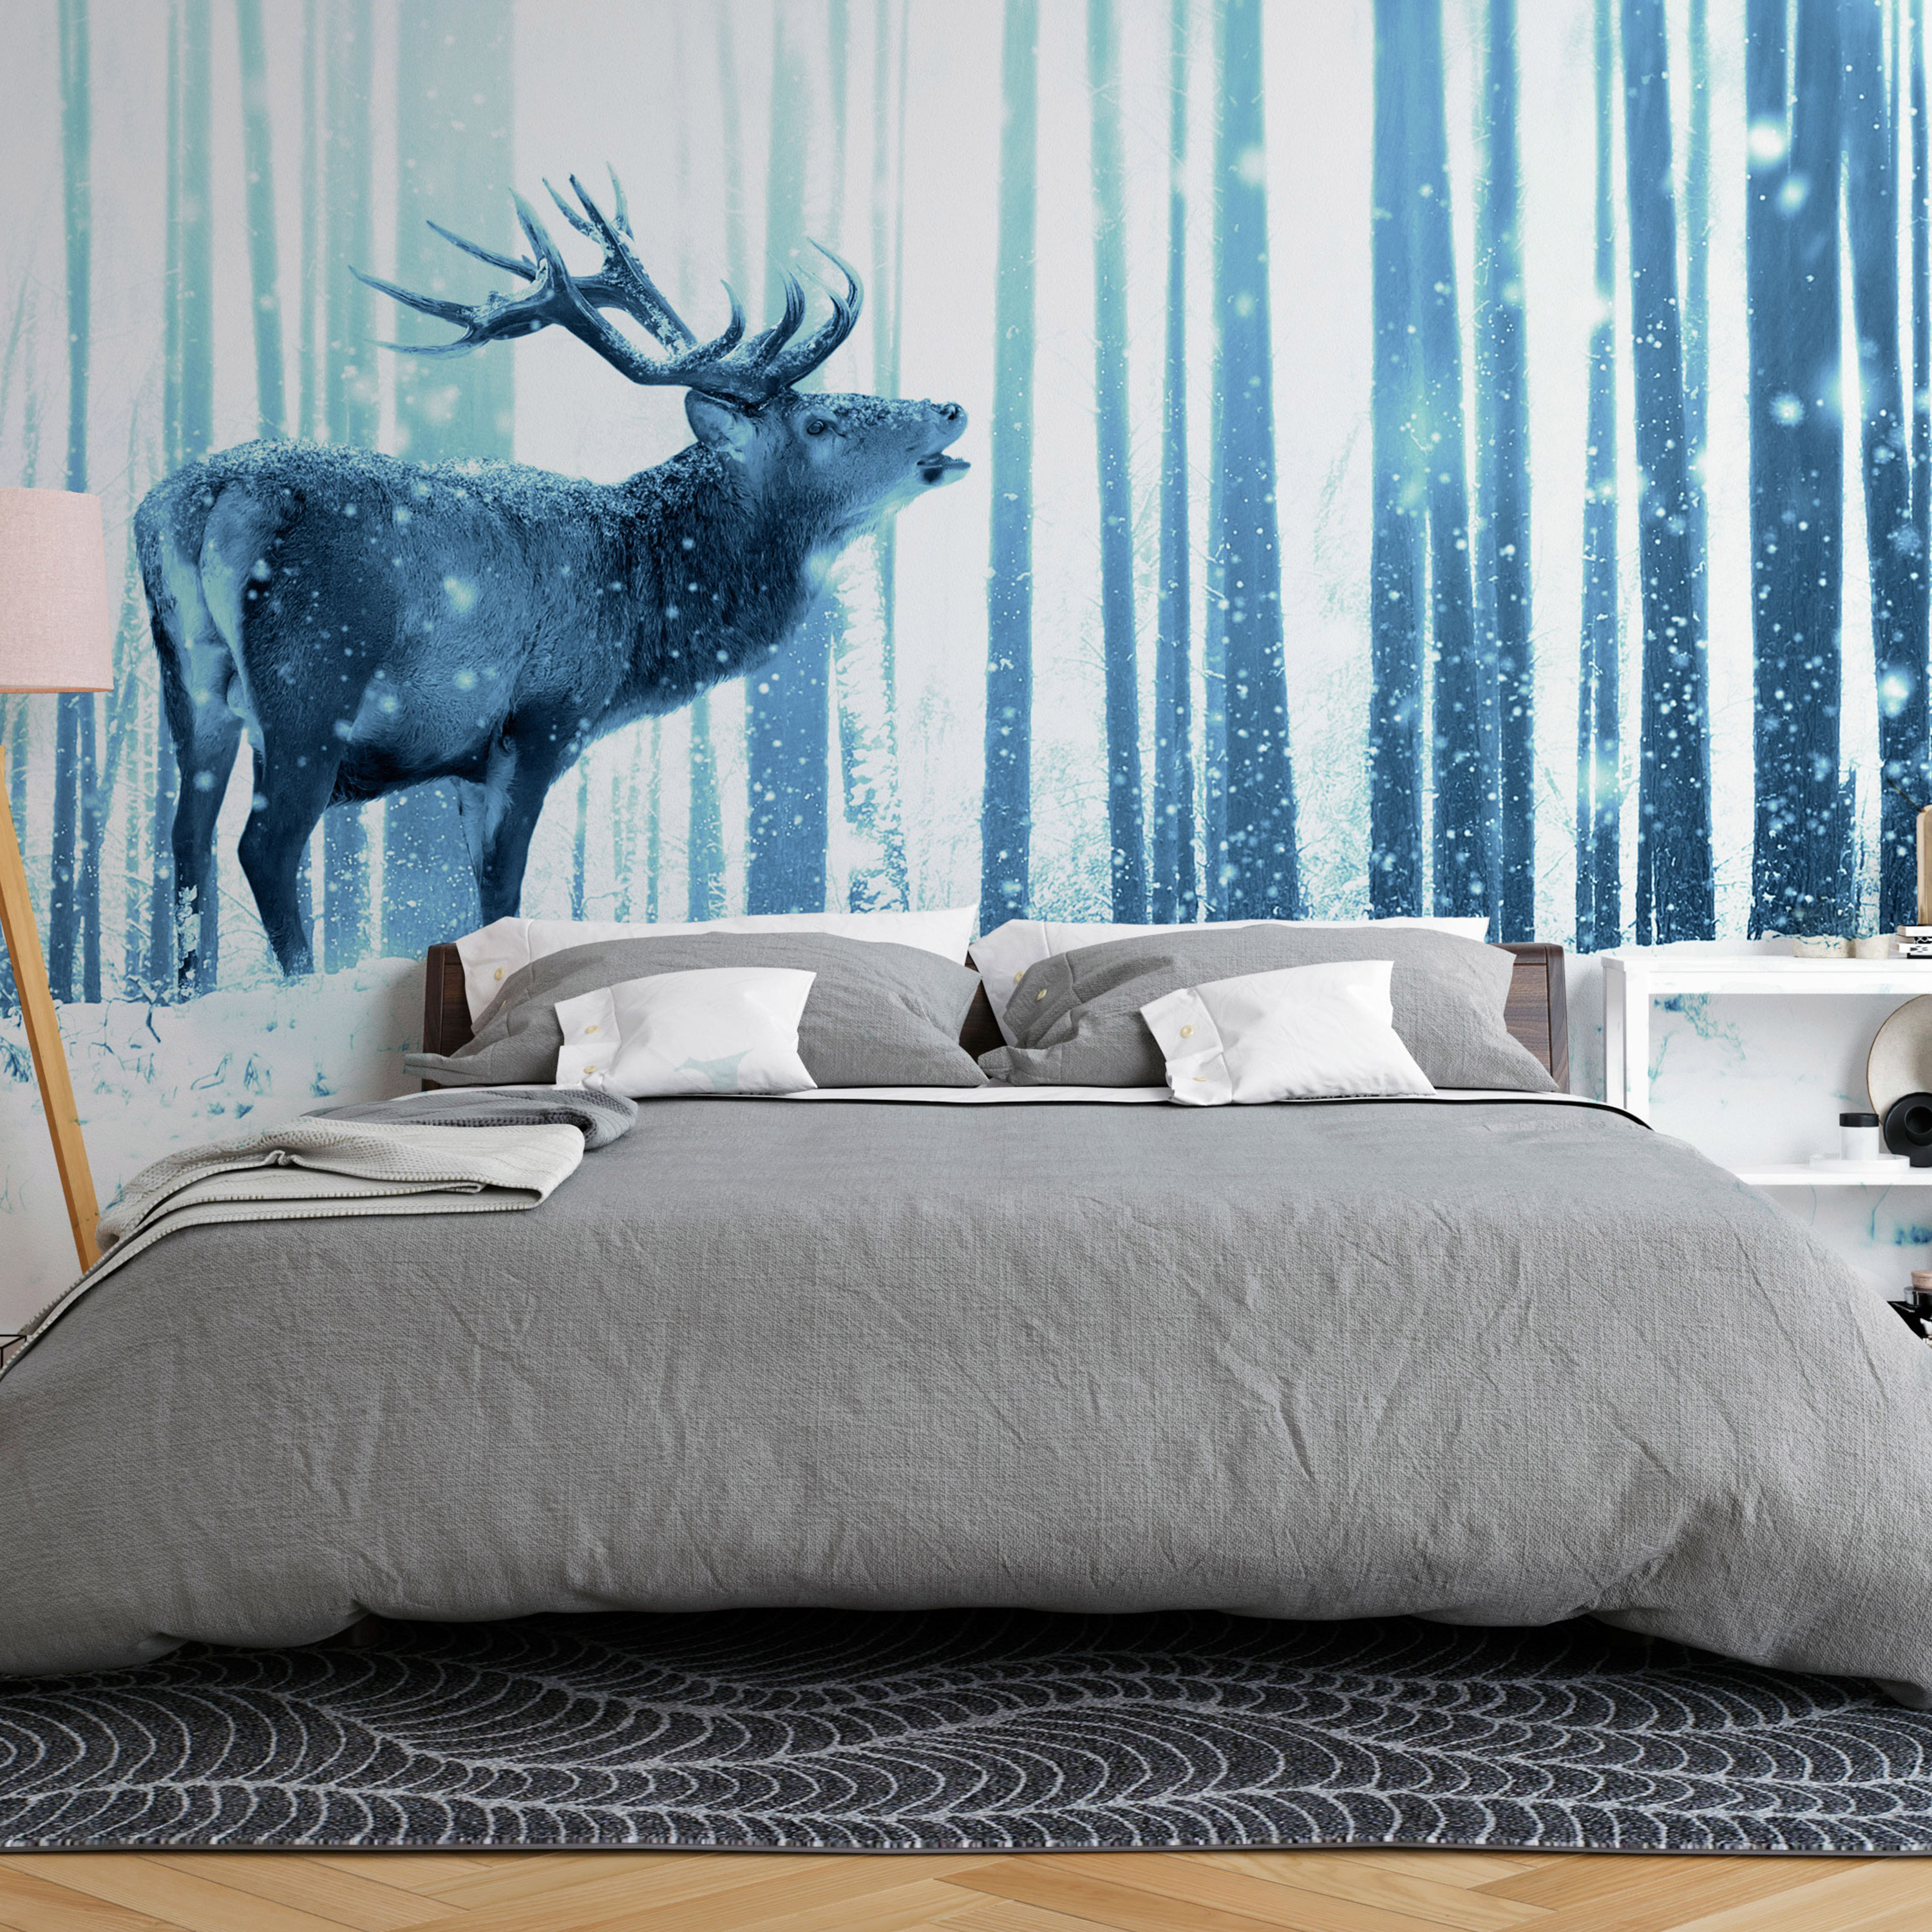 Wallpaper - Deer in the Snow (Blue) - 200x140